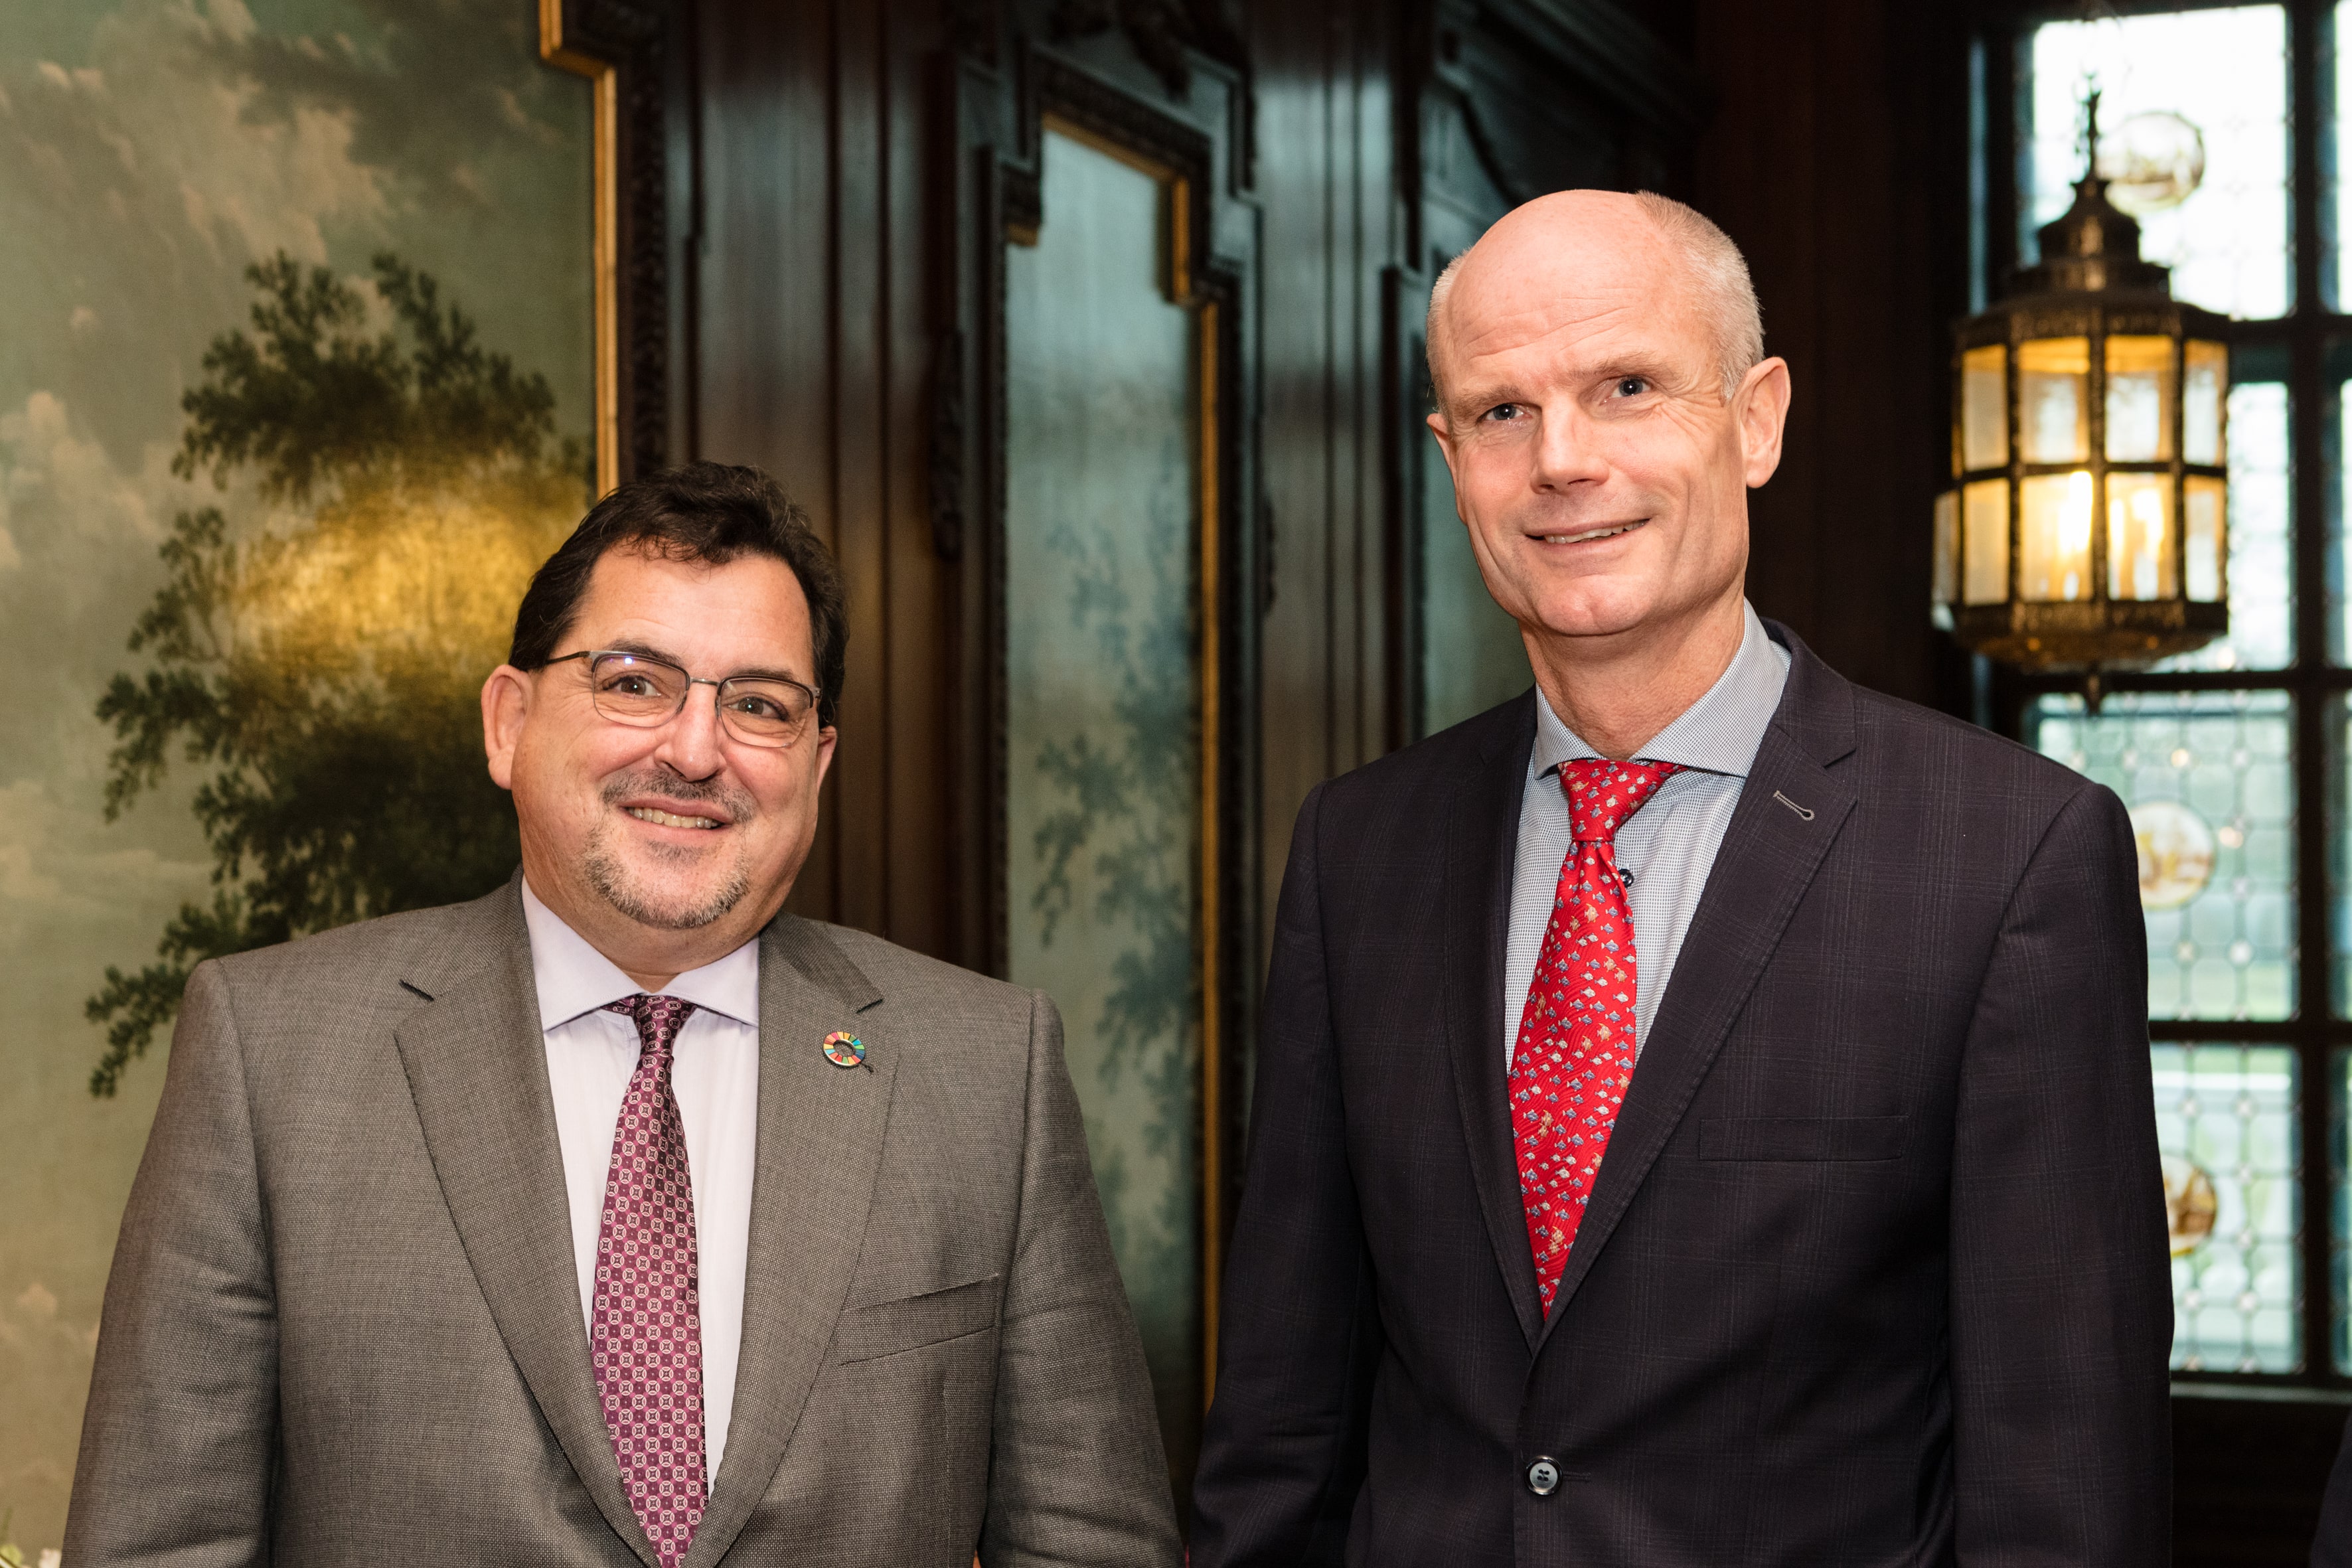 tef Blok, Dutch Minister of Foreign Affairs and Marco Aguiriano, State Secretary for EU affairs, Ministry of Foreign Affairs of Spain